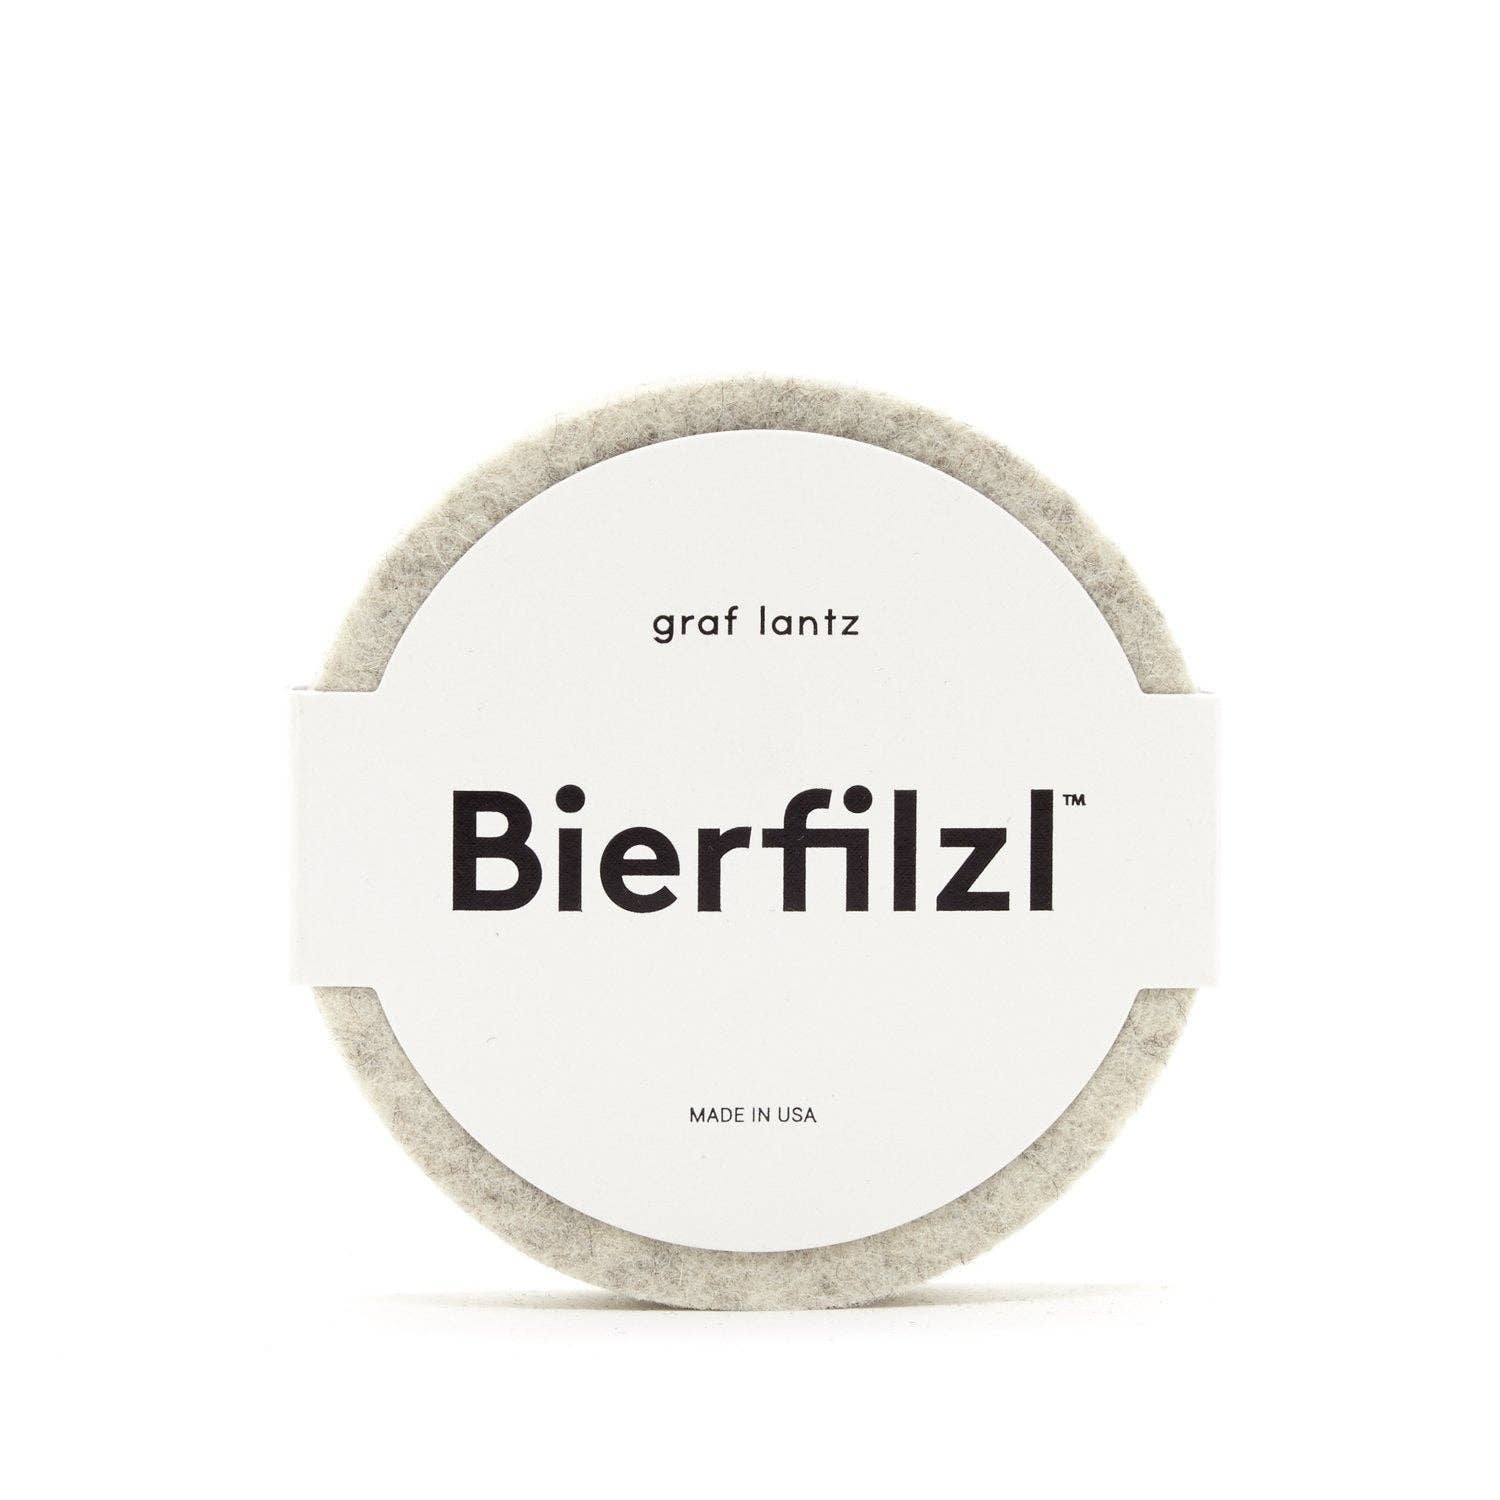 Bierfilzl Merino Wool Felt Rnd Coaster Solid 4 Pack - Heather White  Graf Lantz